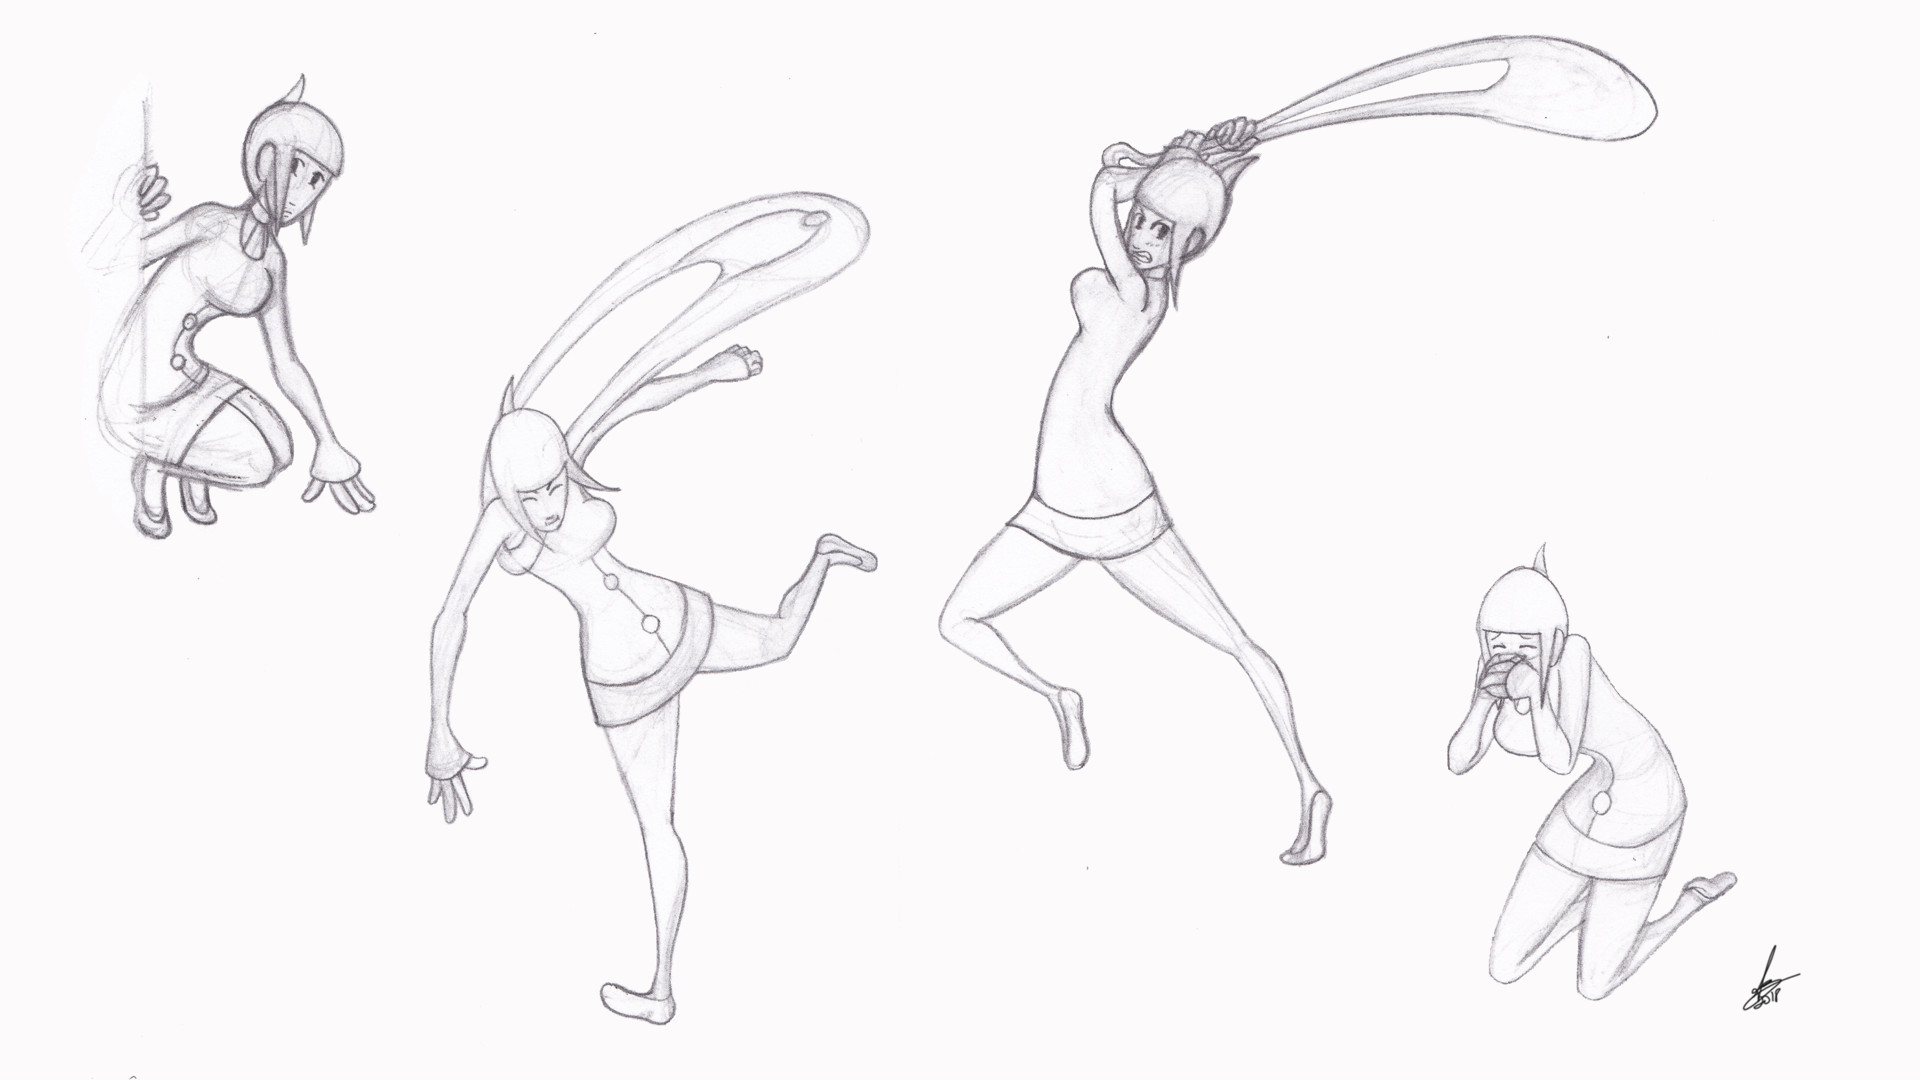 Sceyeris - Practice sketches on Krita, still trying to... | Facebook